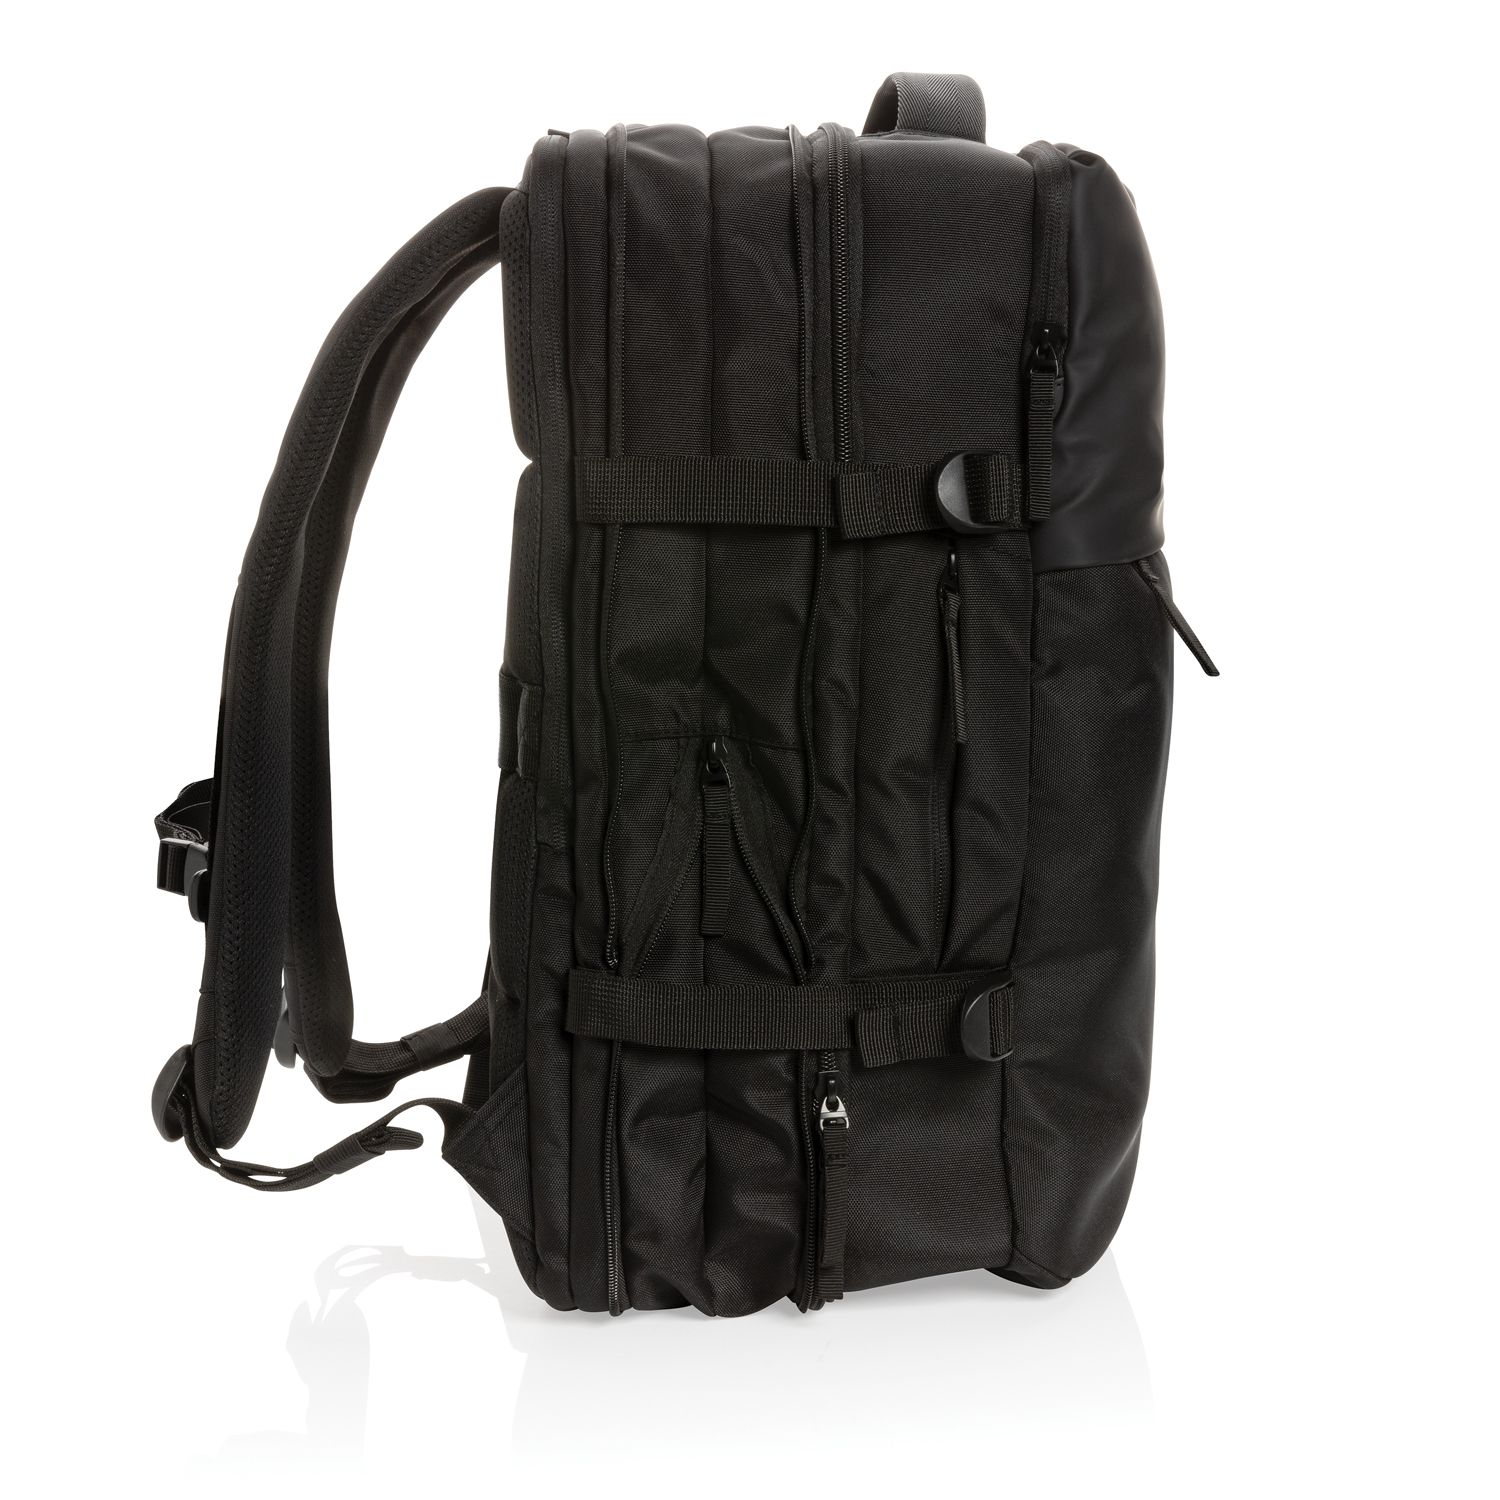 Рюкзак для путешествий Swiss Peak из rPET AWARE с регулируемым объемом, 15.6"